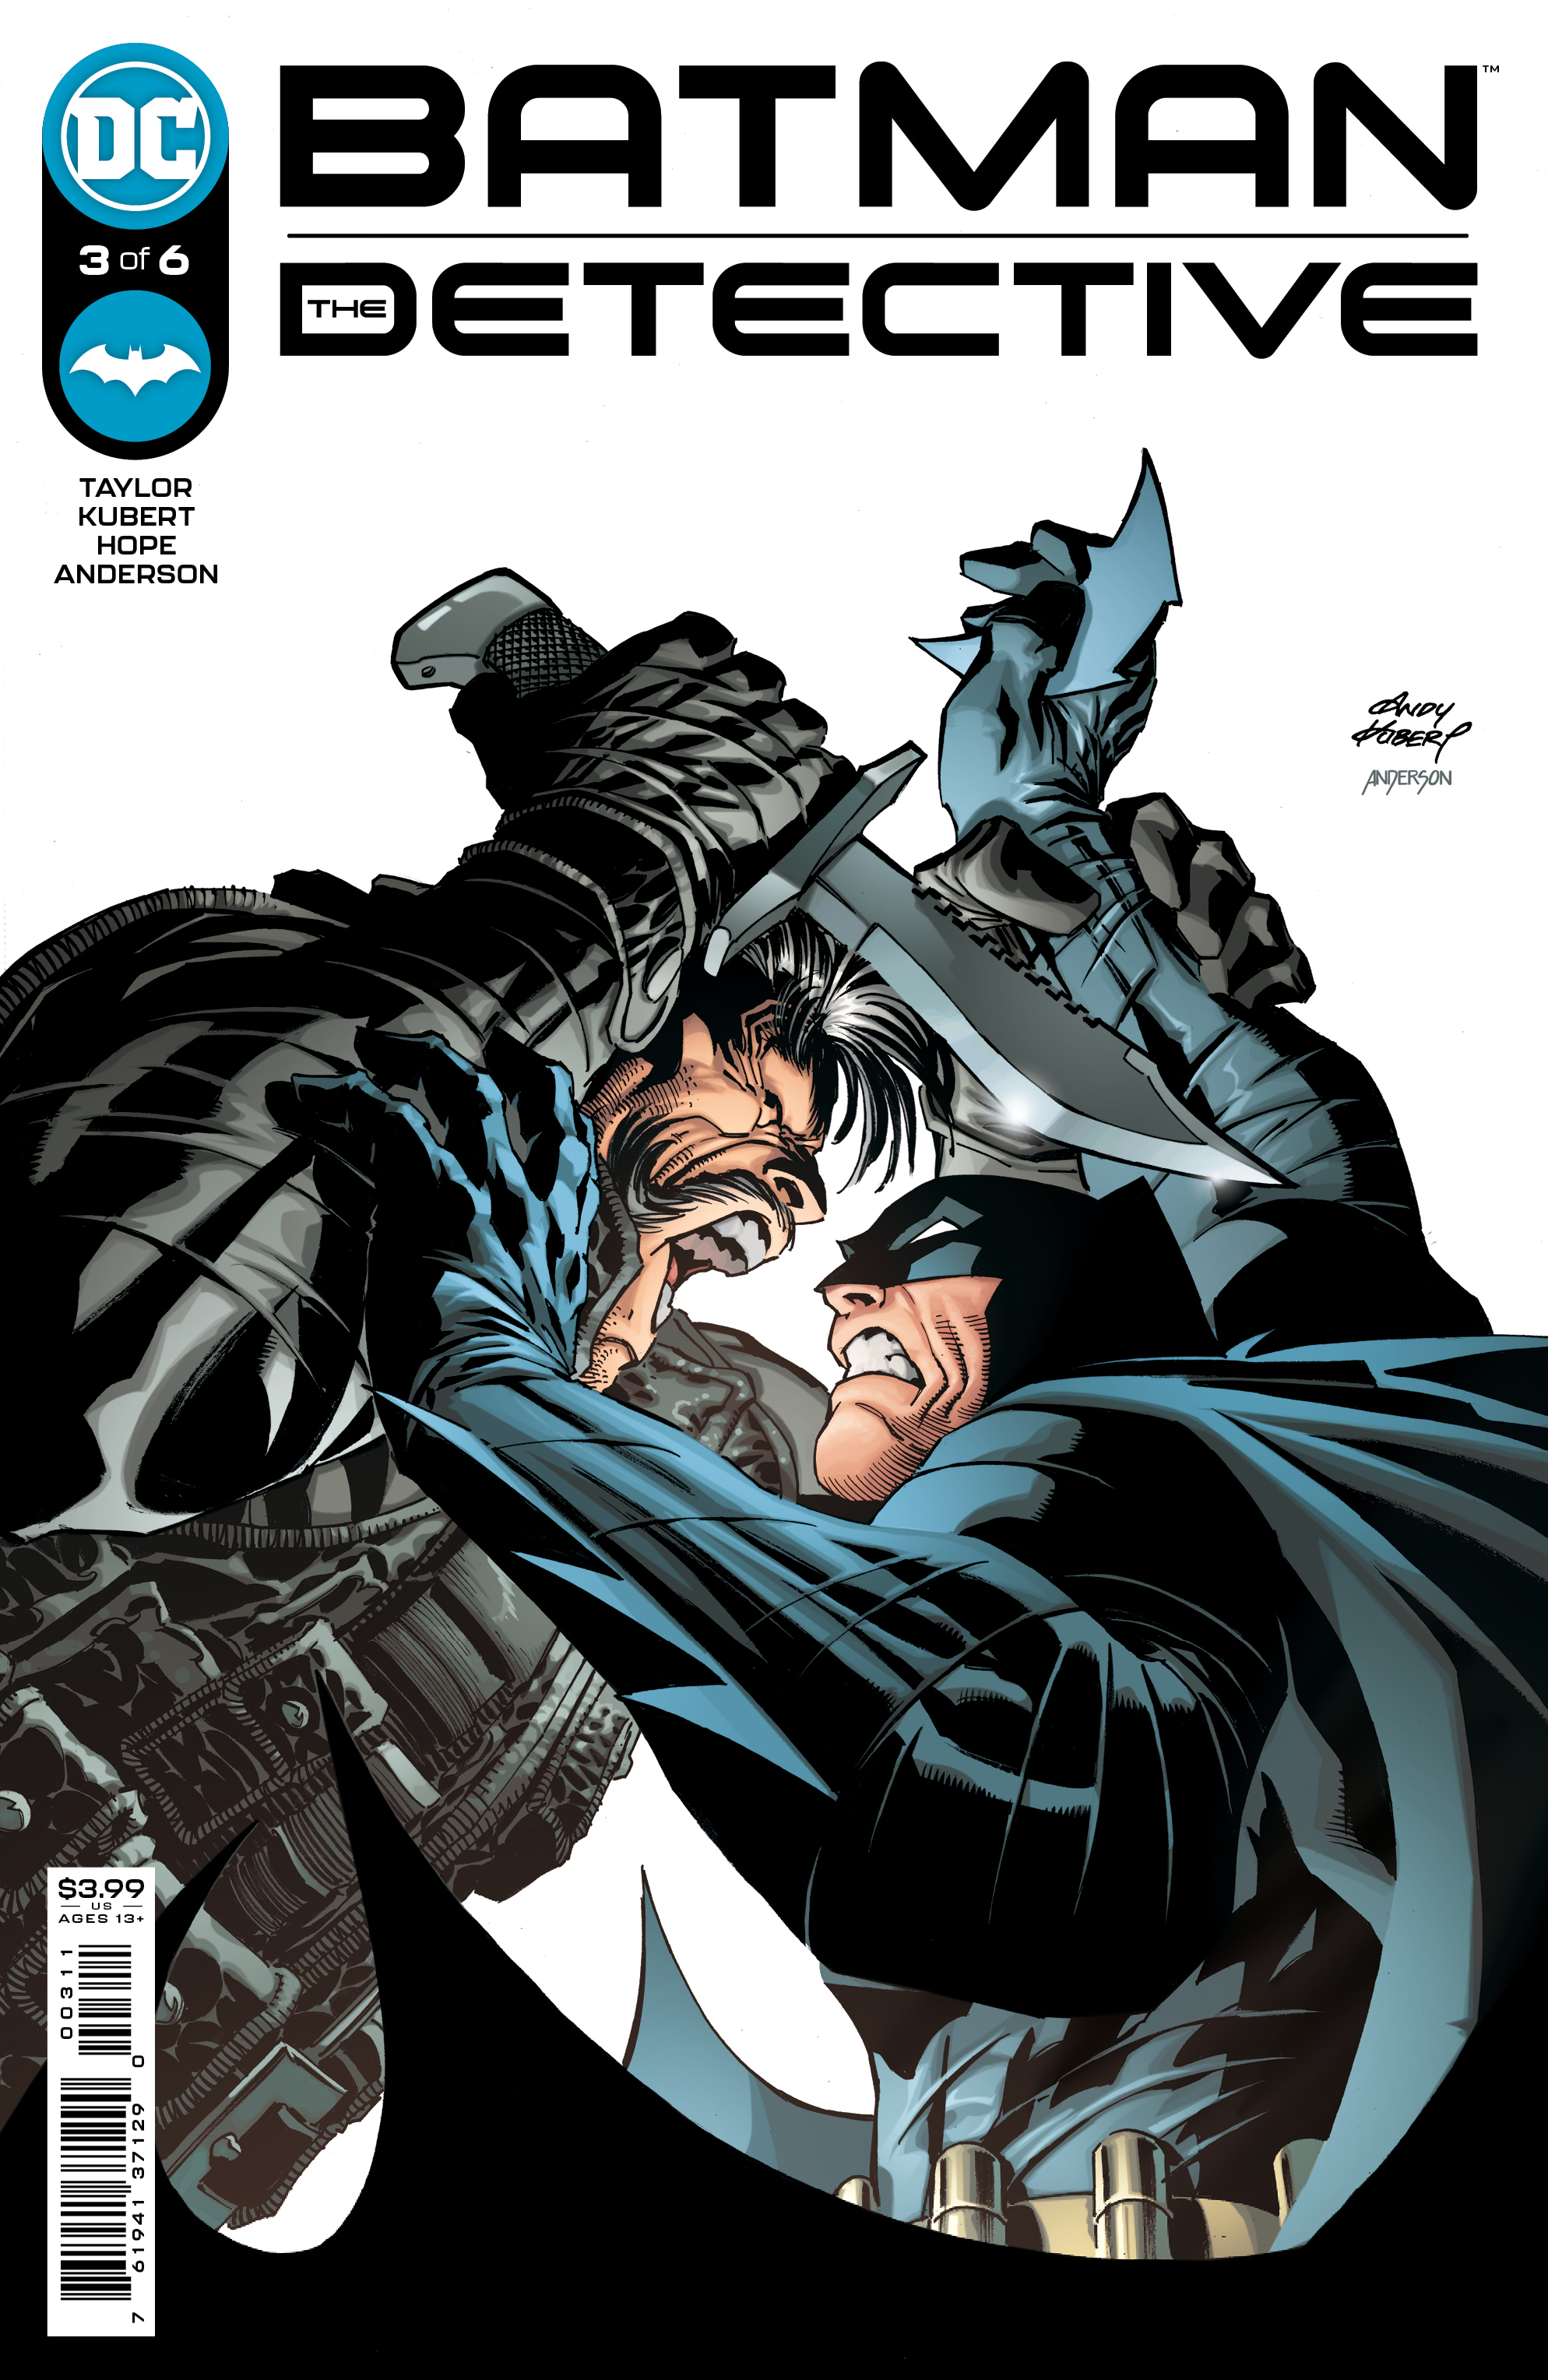 BATMAN THE DETECTIVE #3 (OF 6) CVR A ANDY KUBERT (2021) - Issues - Worlds'  End Comics